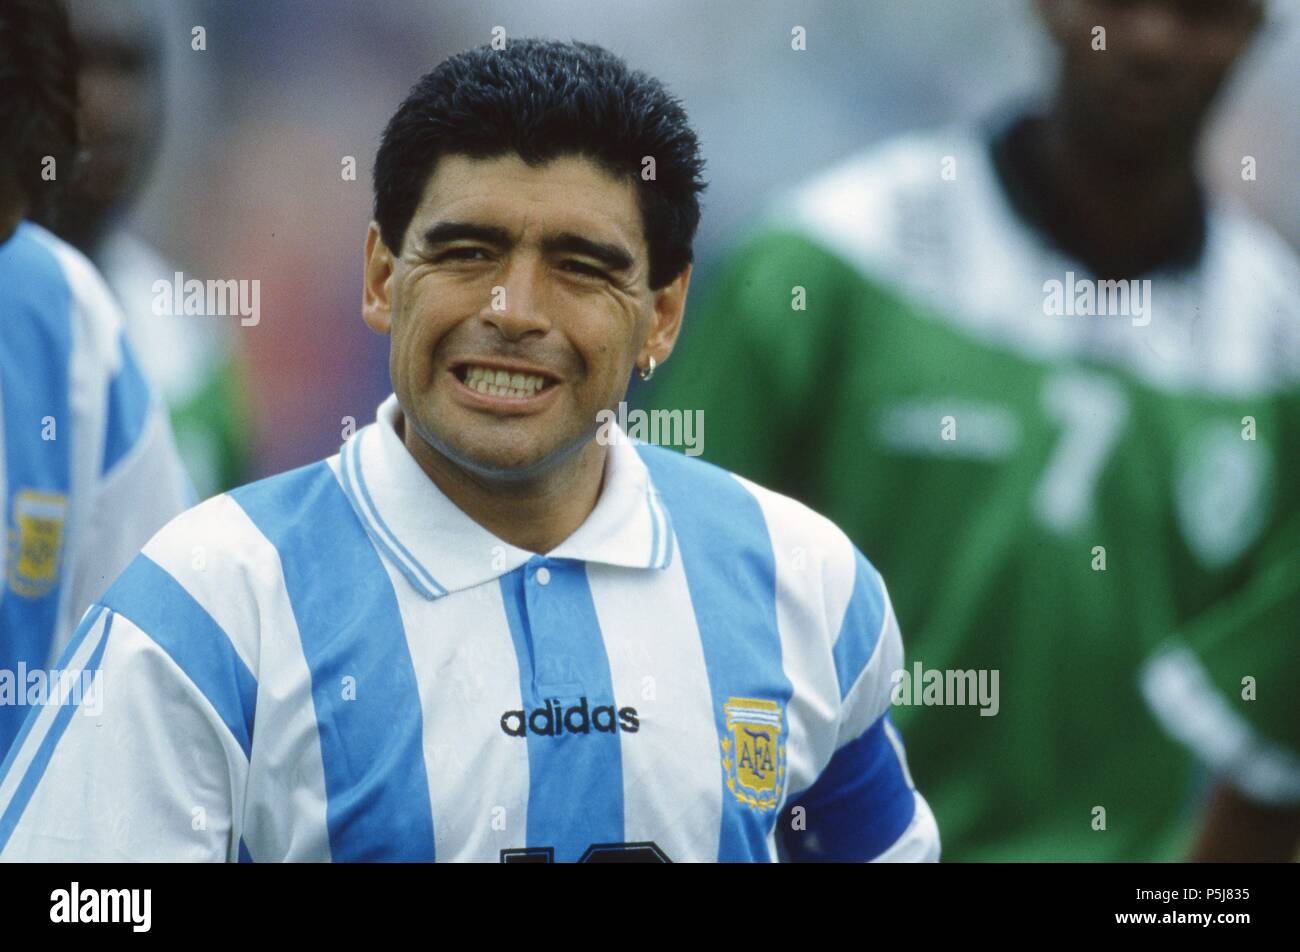 Diego maradona 1994 hi-res stock photography and images - Alamy